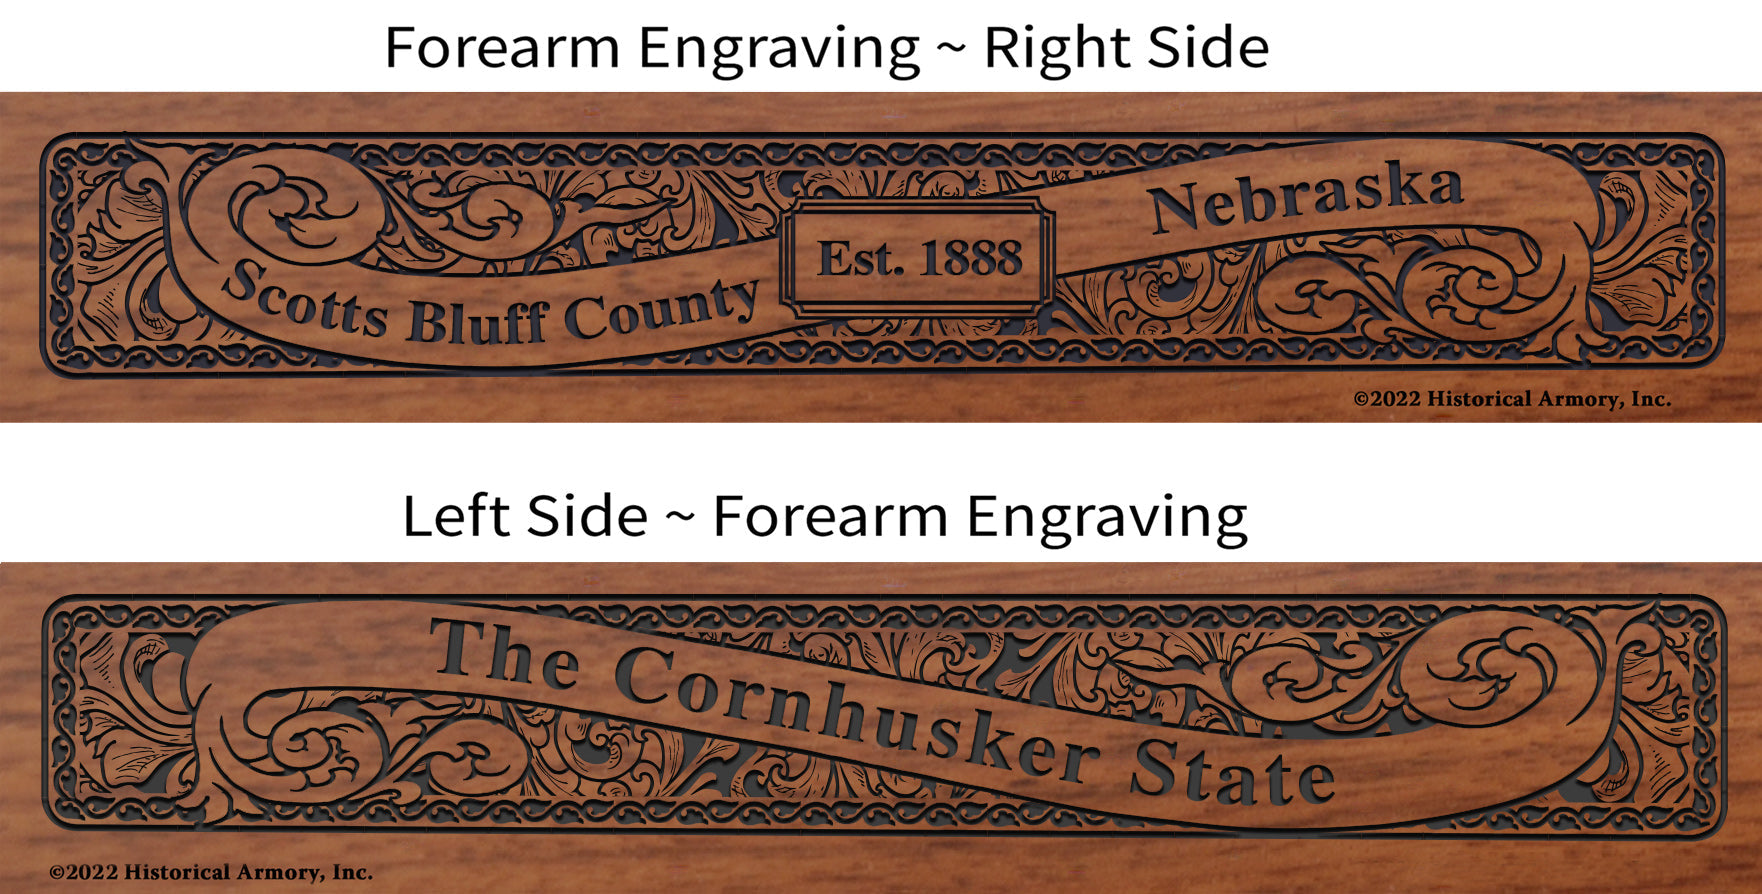 Scotts Bluff County Nebraska Engraved Rifle Forearm